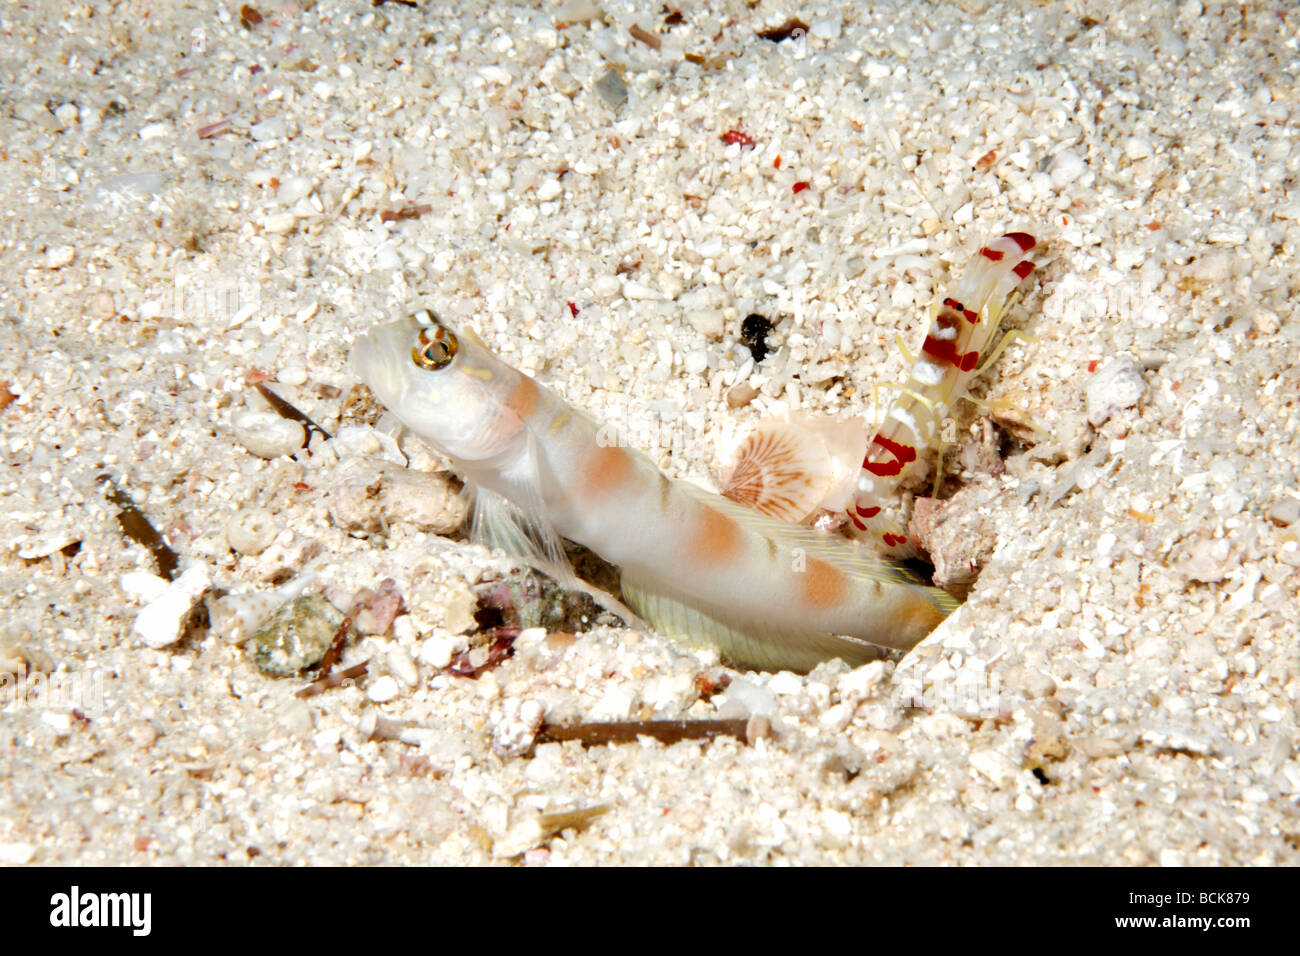 Steinitz shrimpgoby, Amblyeleotris steinitzi in a symbiotic relationship with a Randalls snapping shrimp. Alpheus randalli Stock Photo